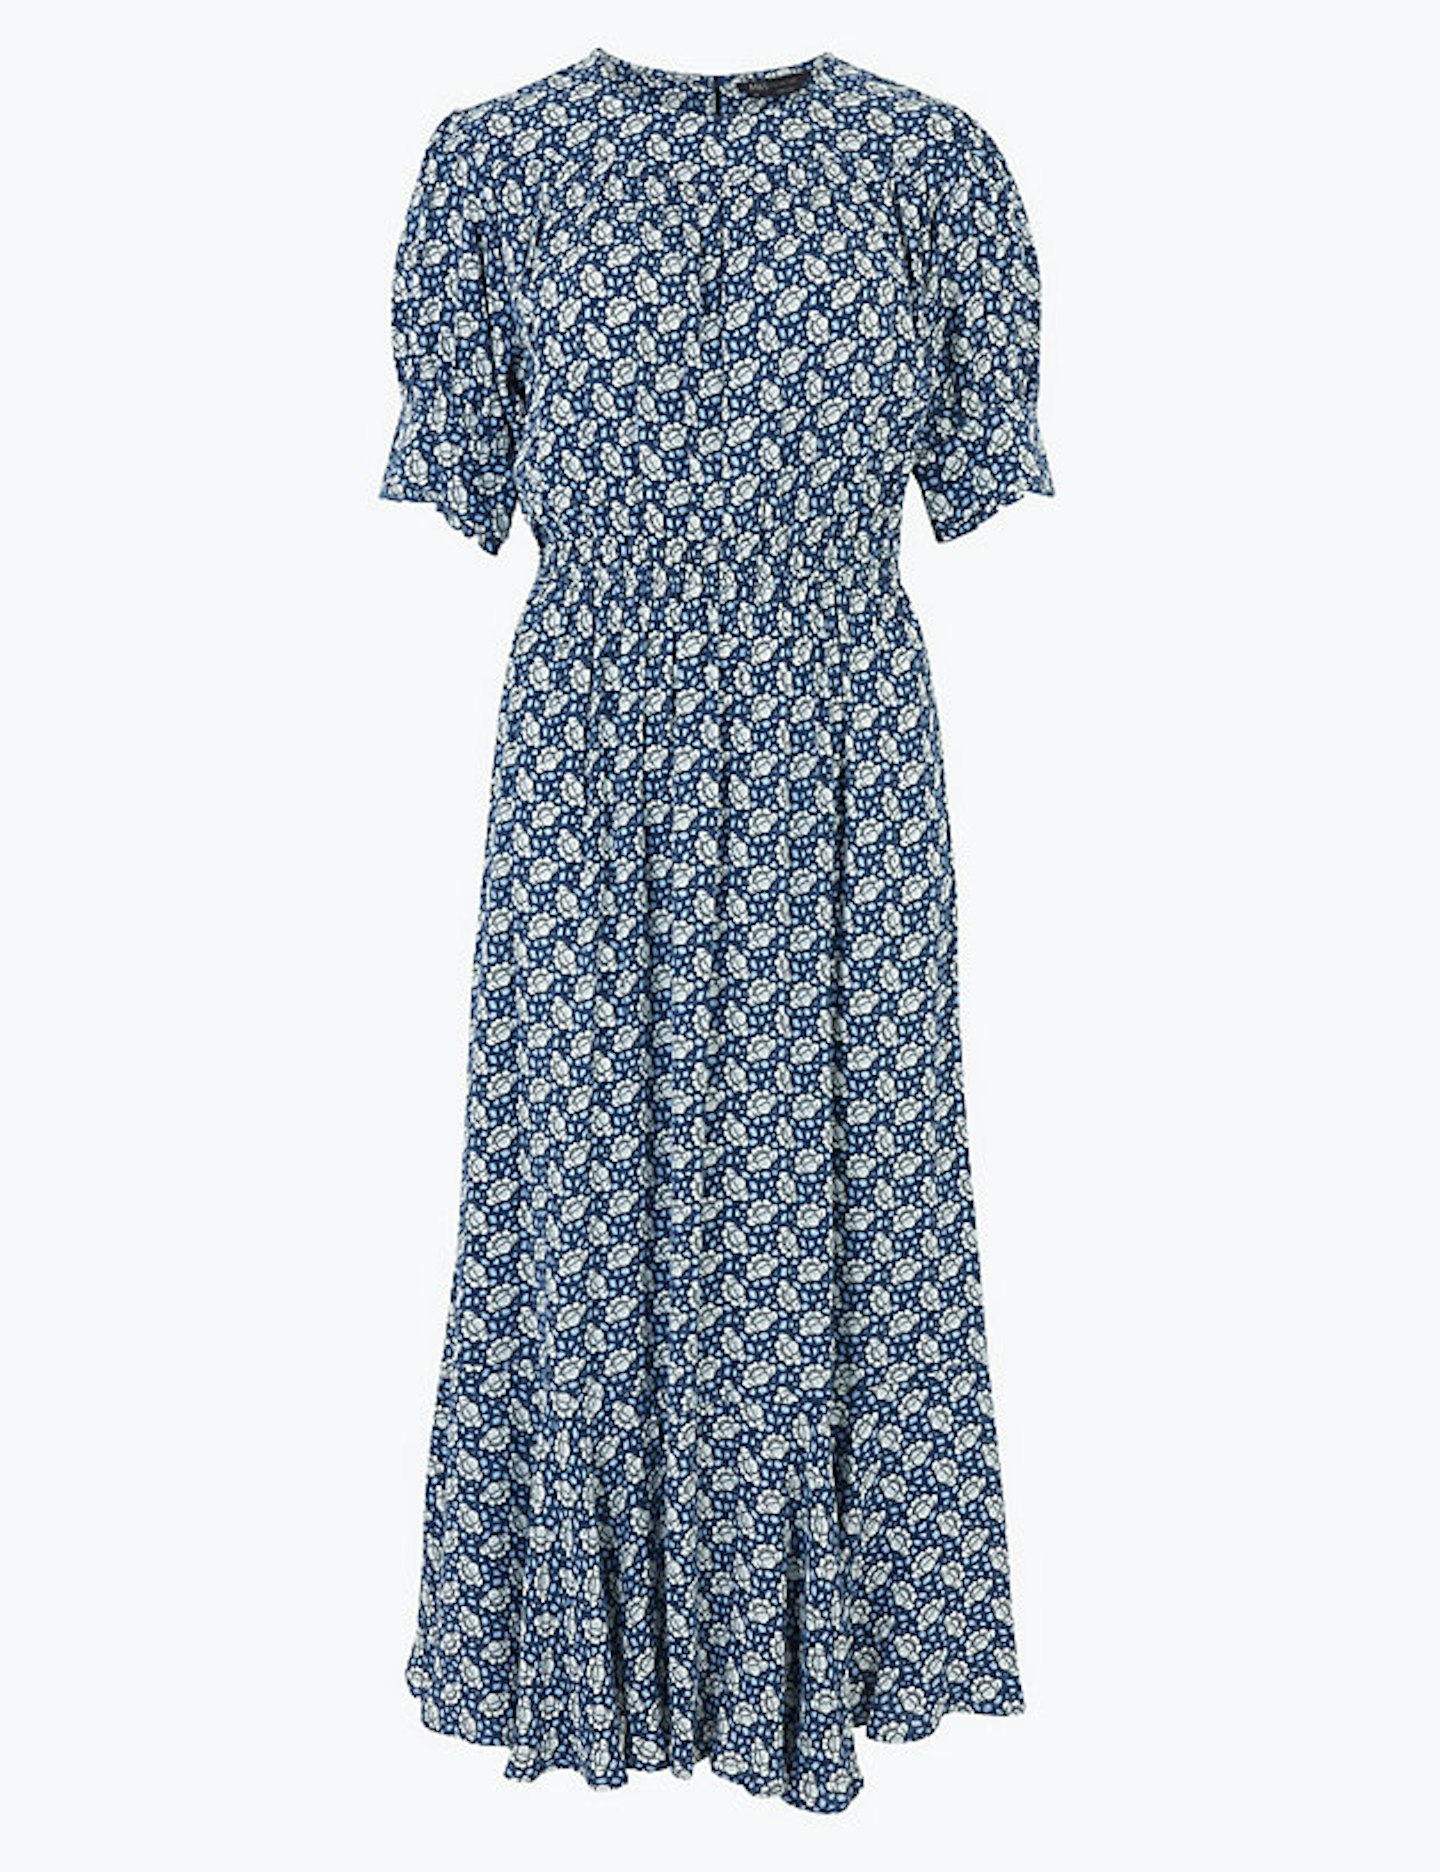 Printed Midi Dress, £39.50